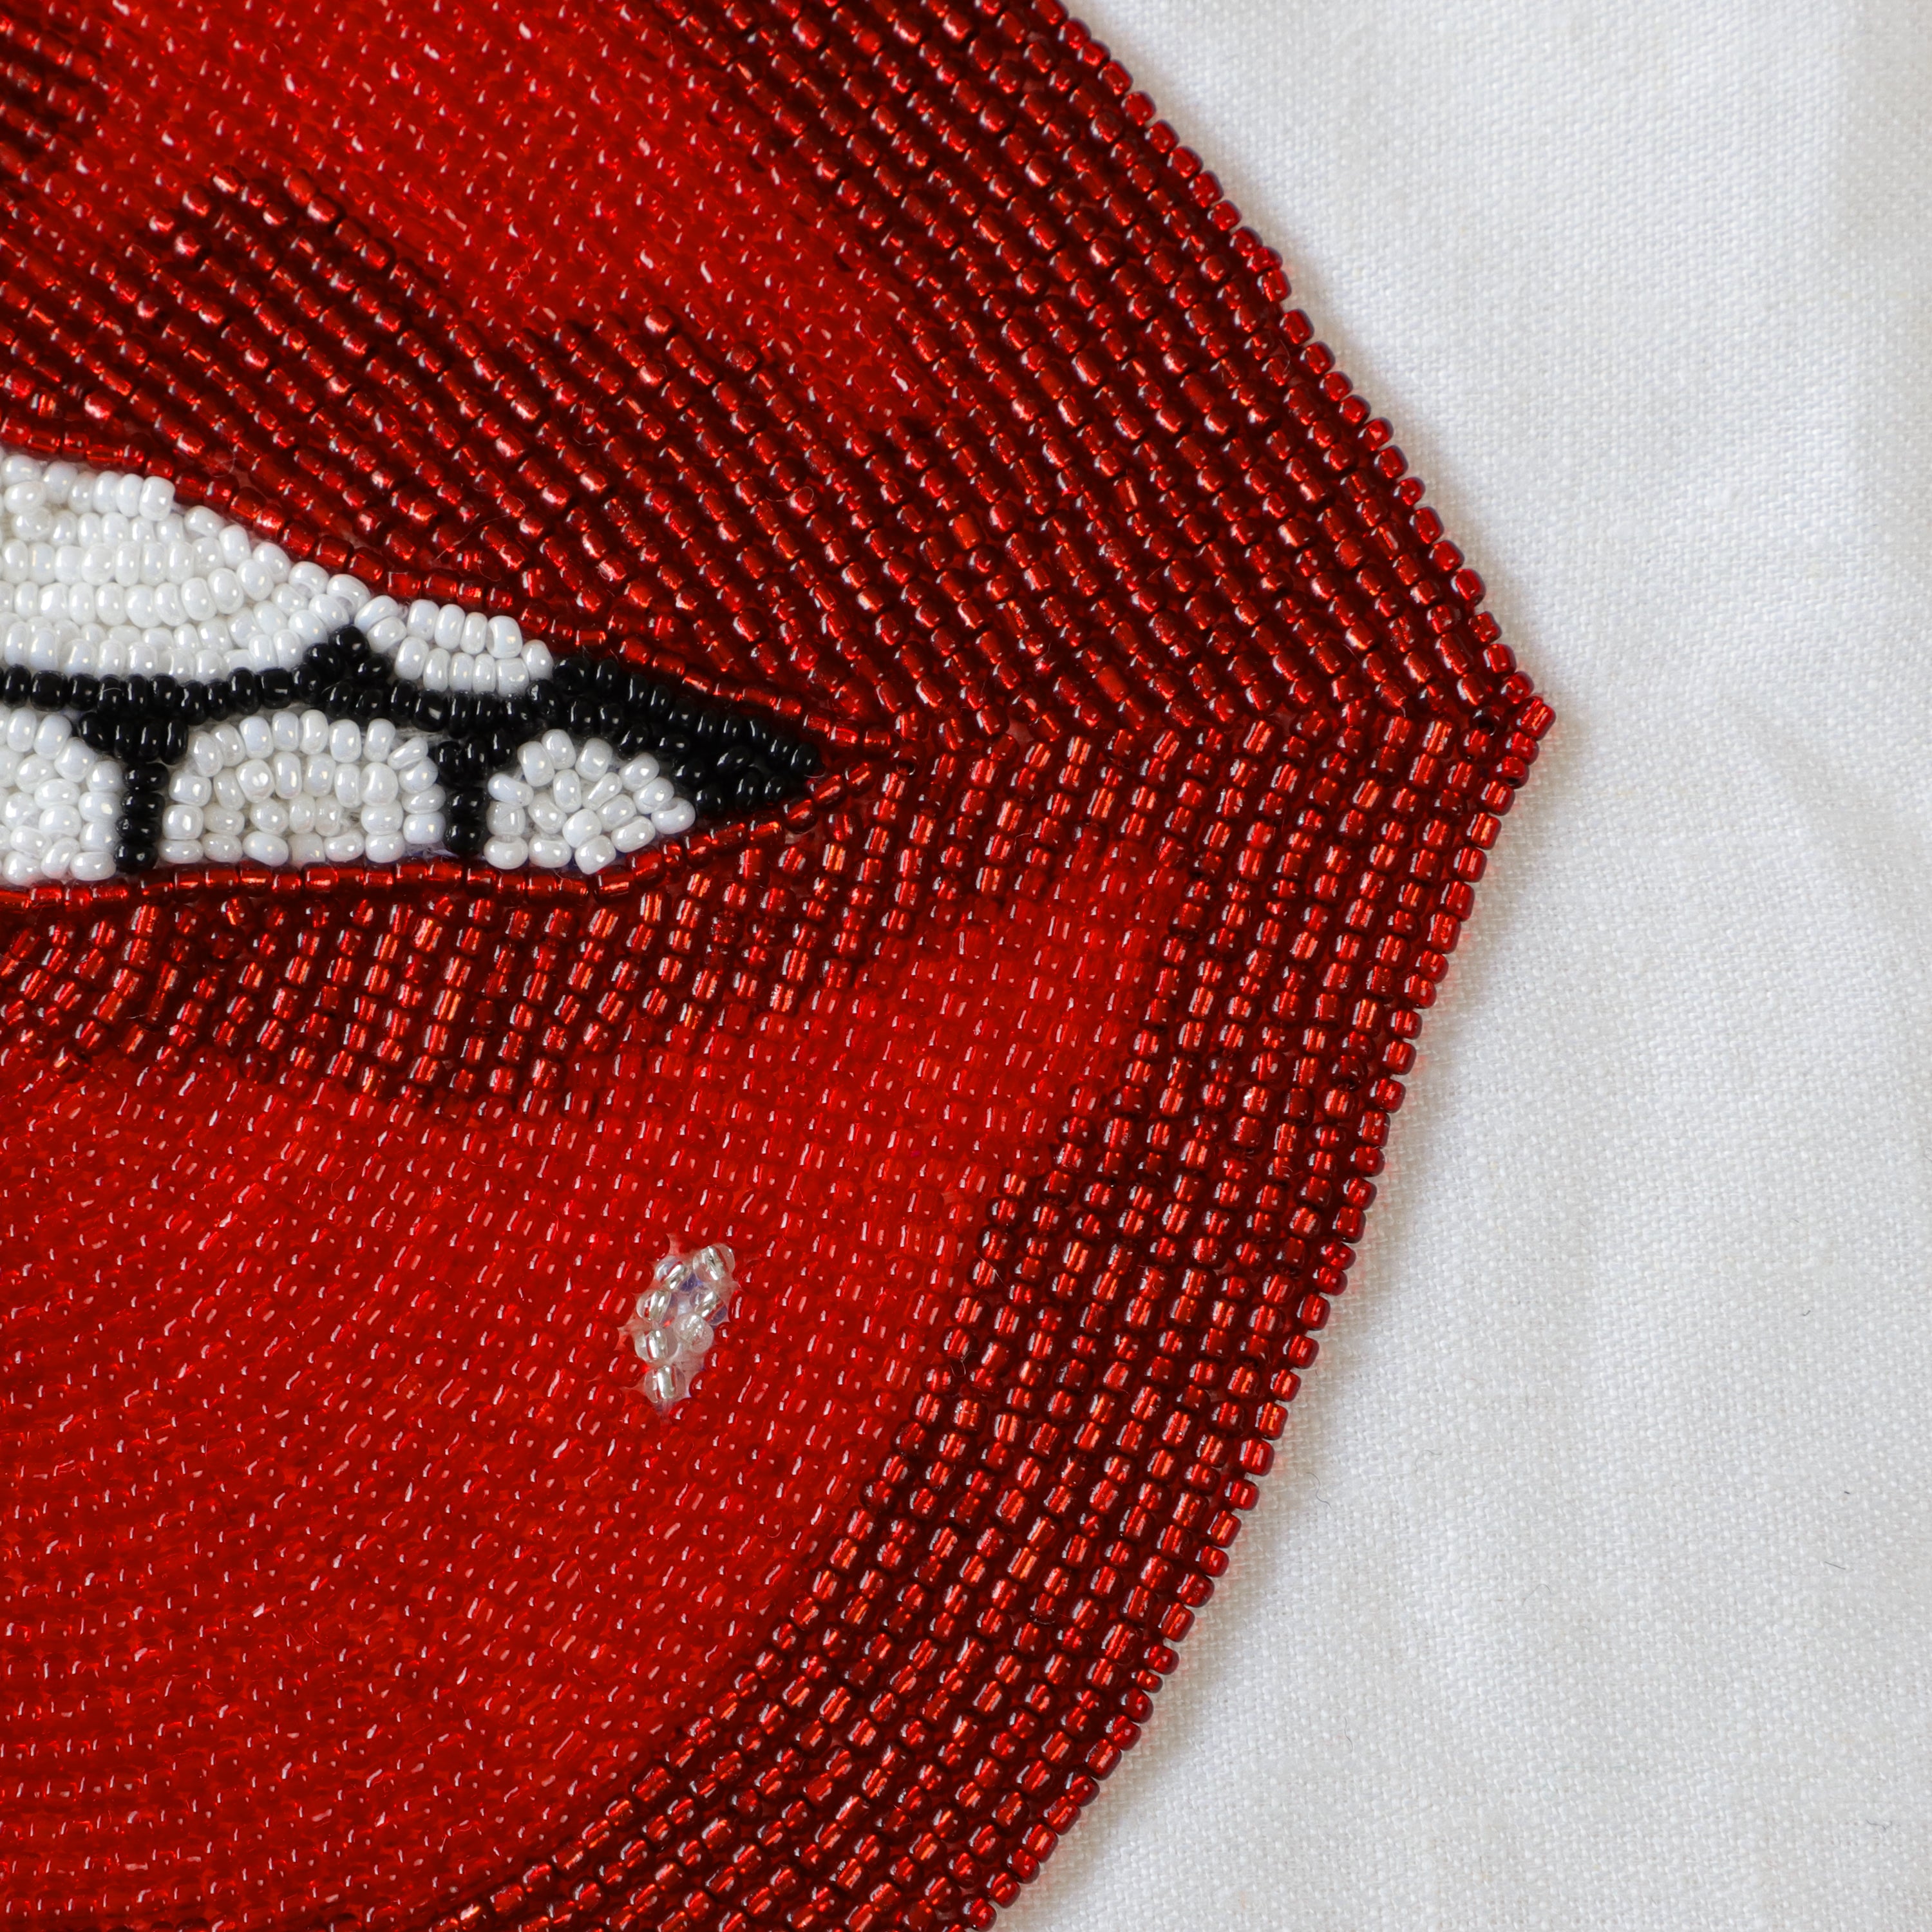 Beaded Biting Lips Wall Art